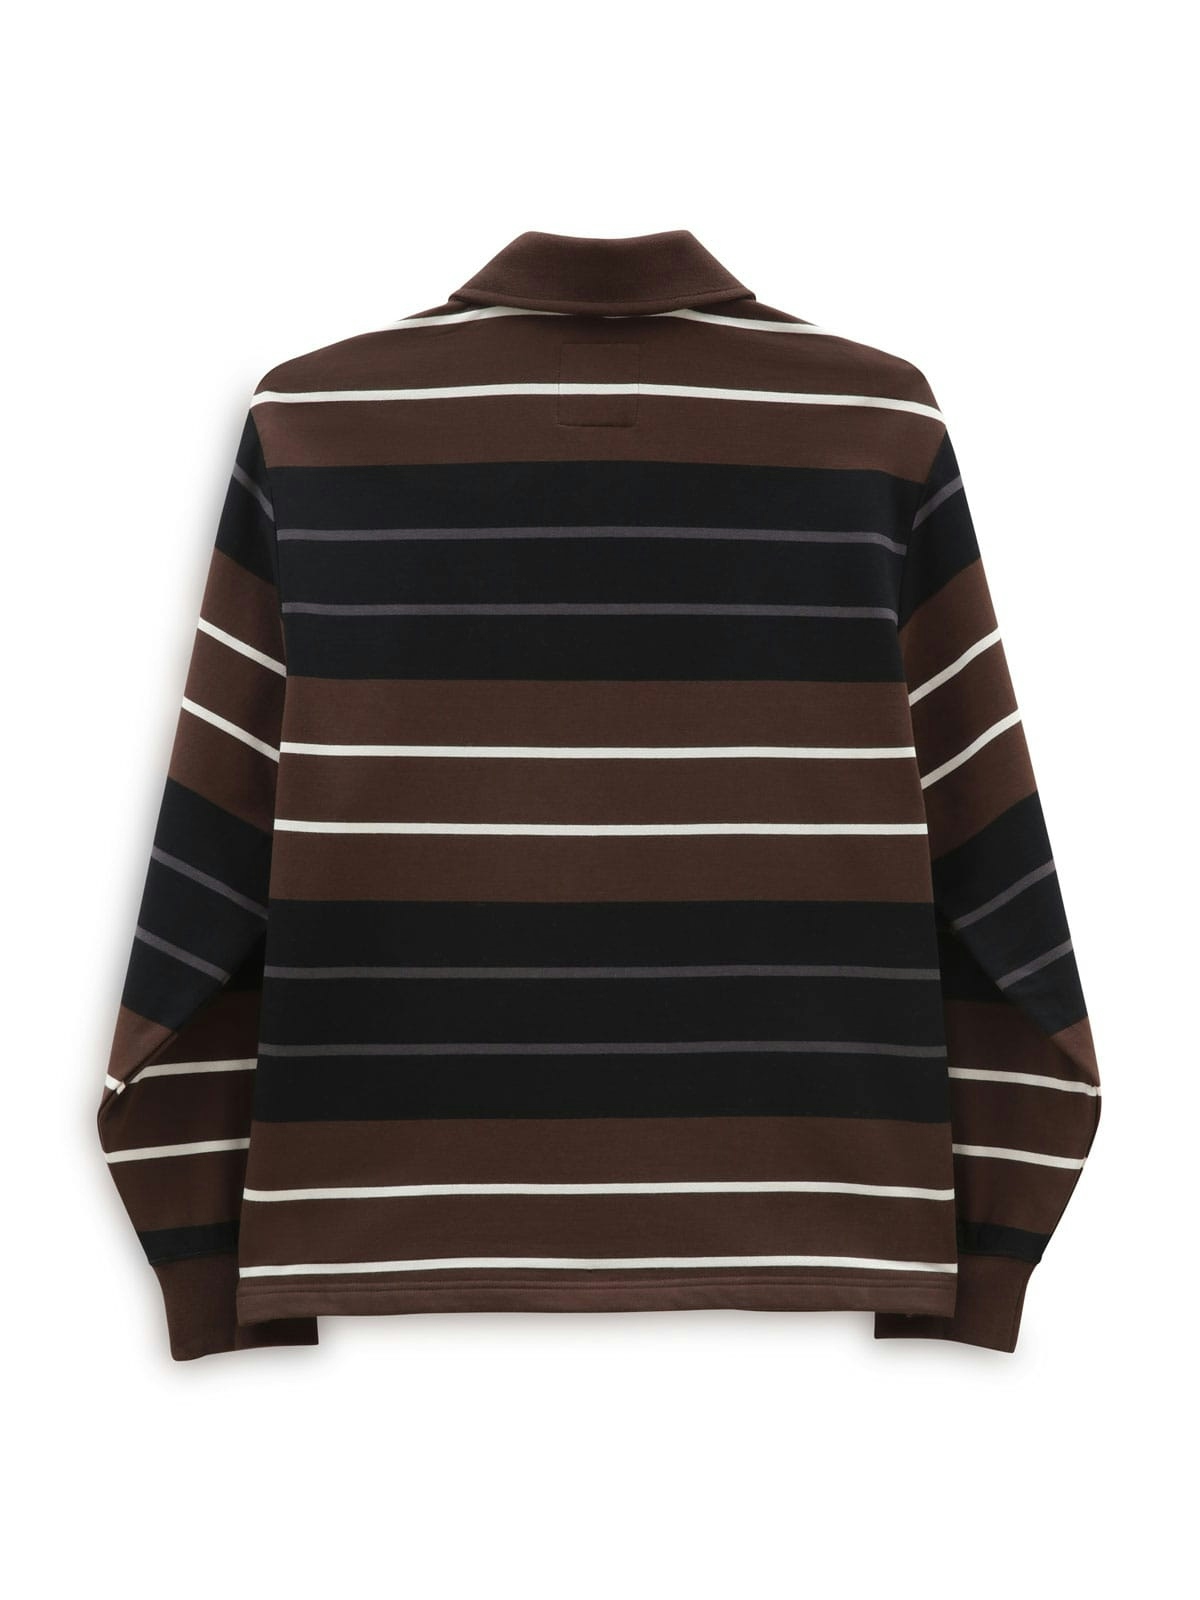 Vans High Hat Fleece Shirt Sweater Black/Demitasse 2